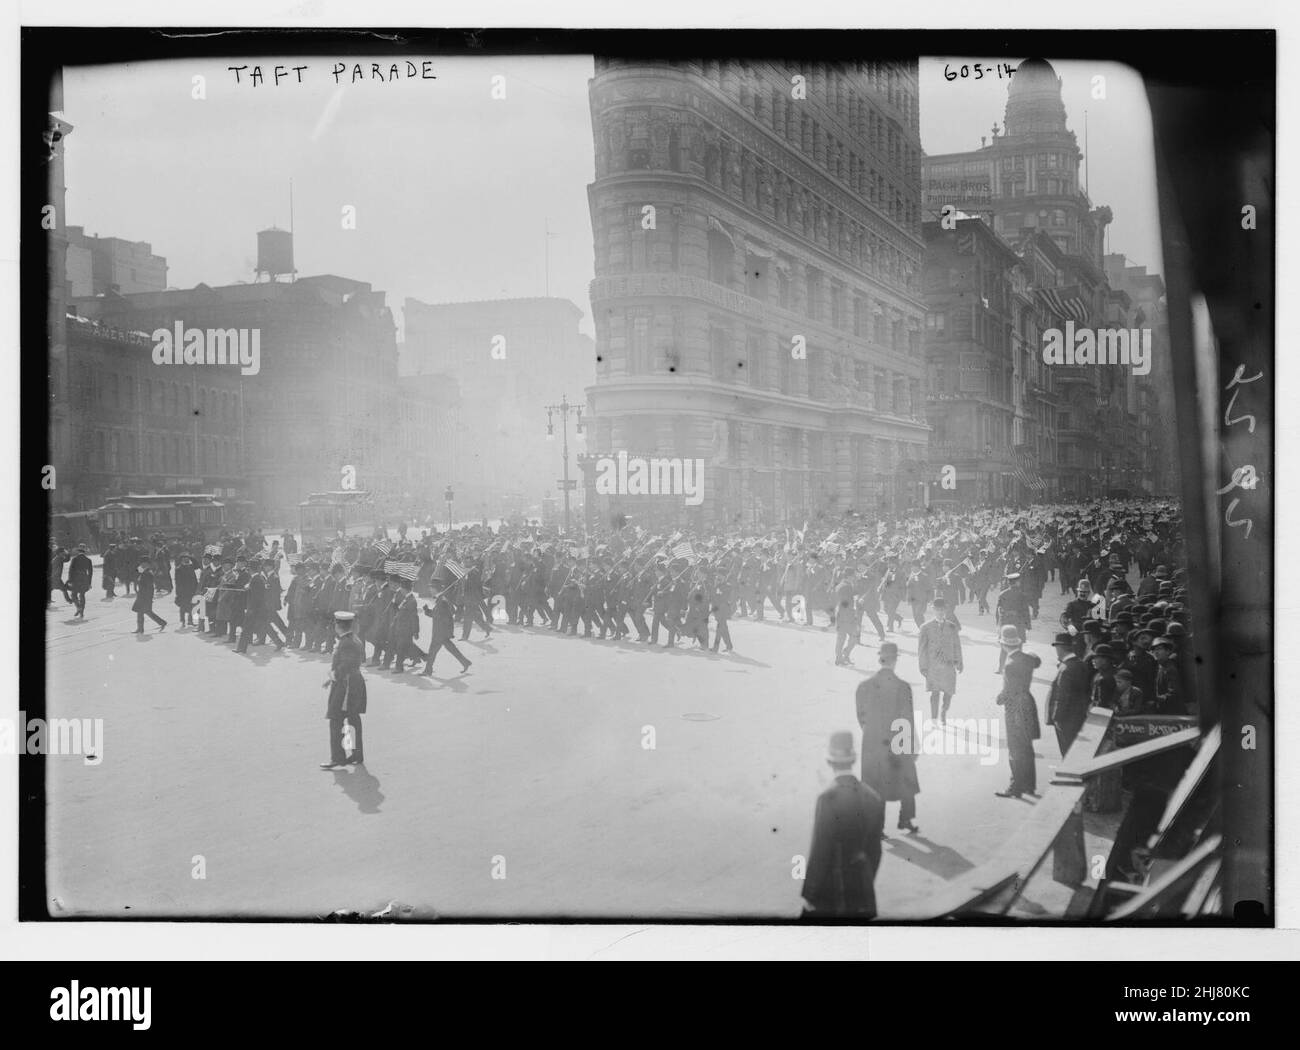 Taft Parade (New York) Stock Photo